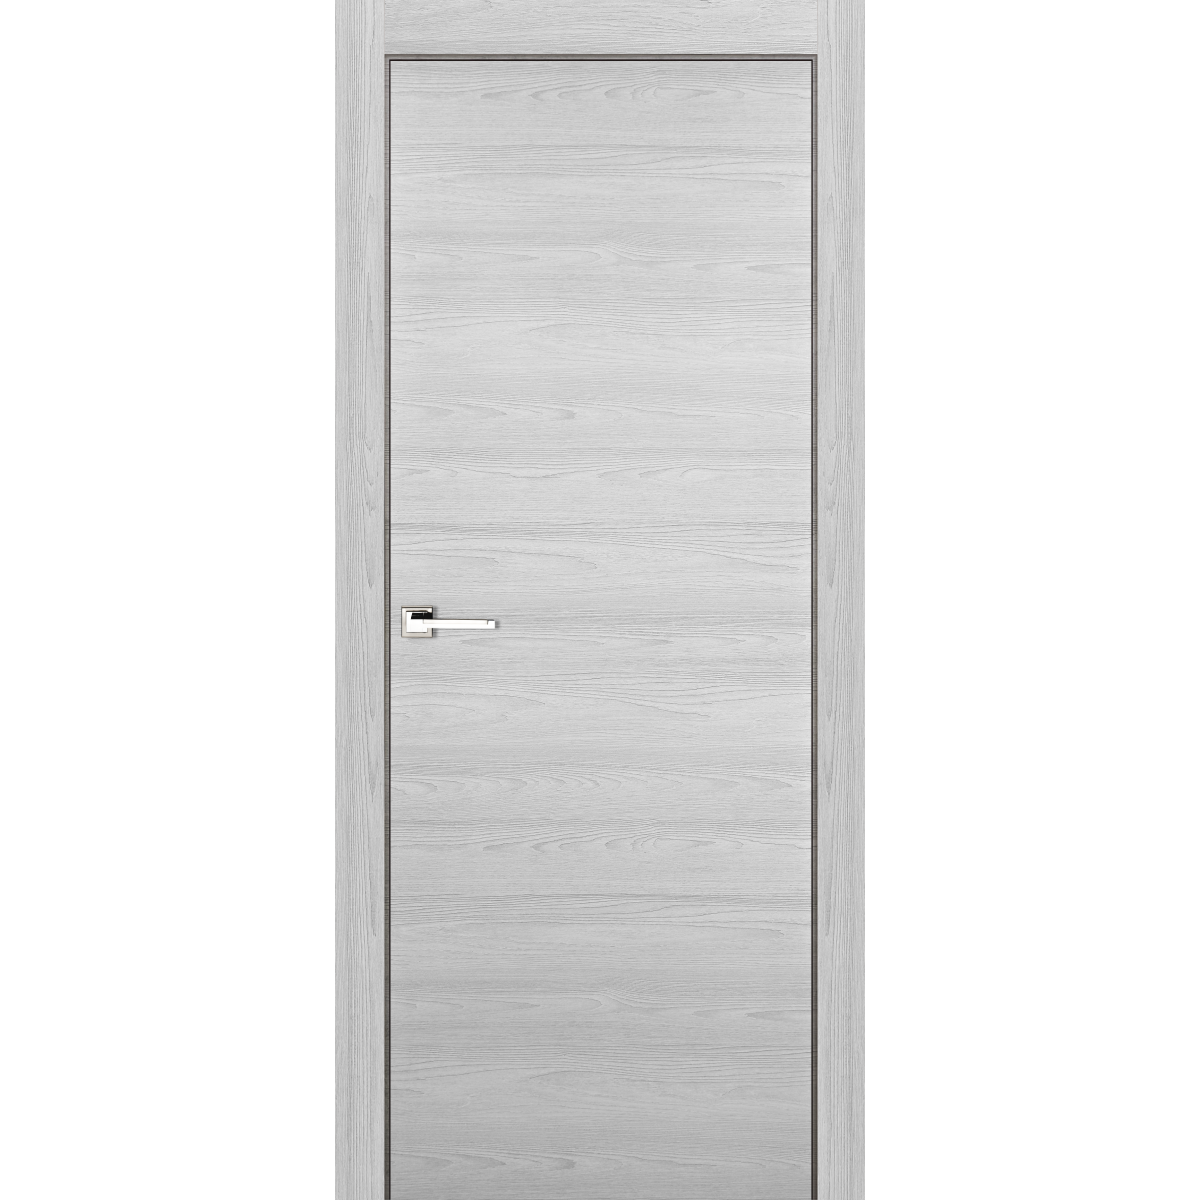 Дверь межкомнатная глухая 90x200 см, ламинация, цвет ясень серый